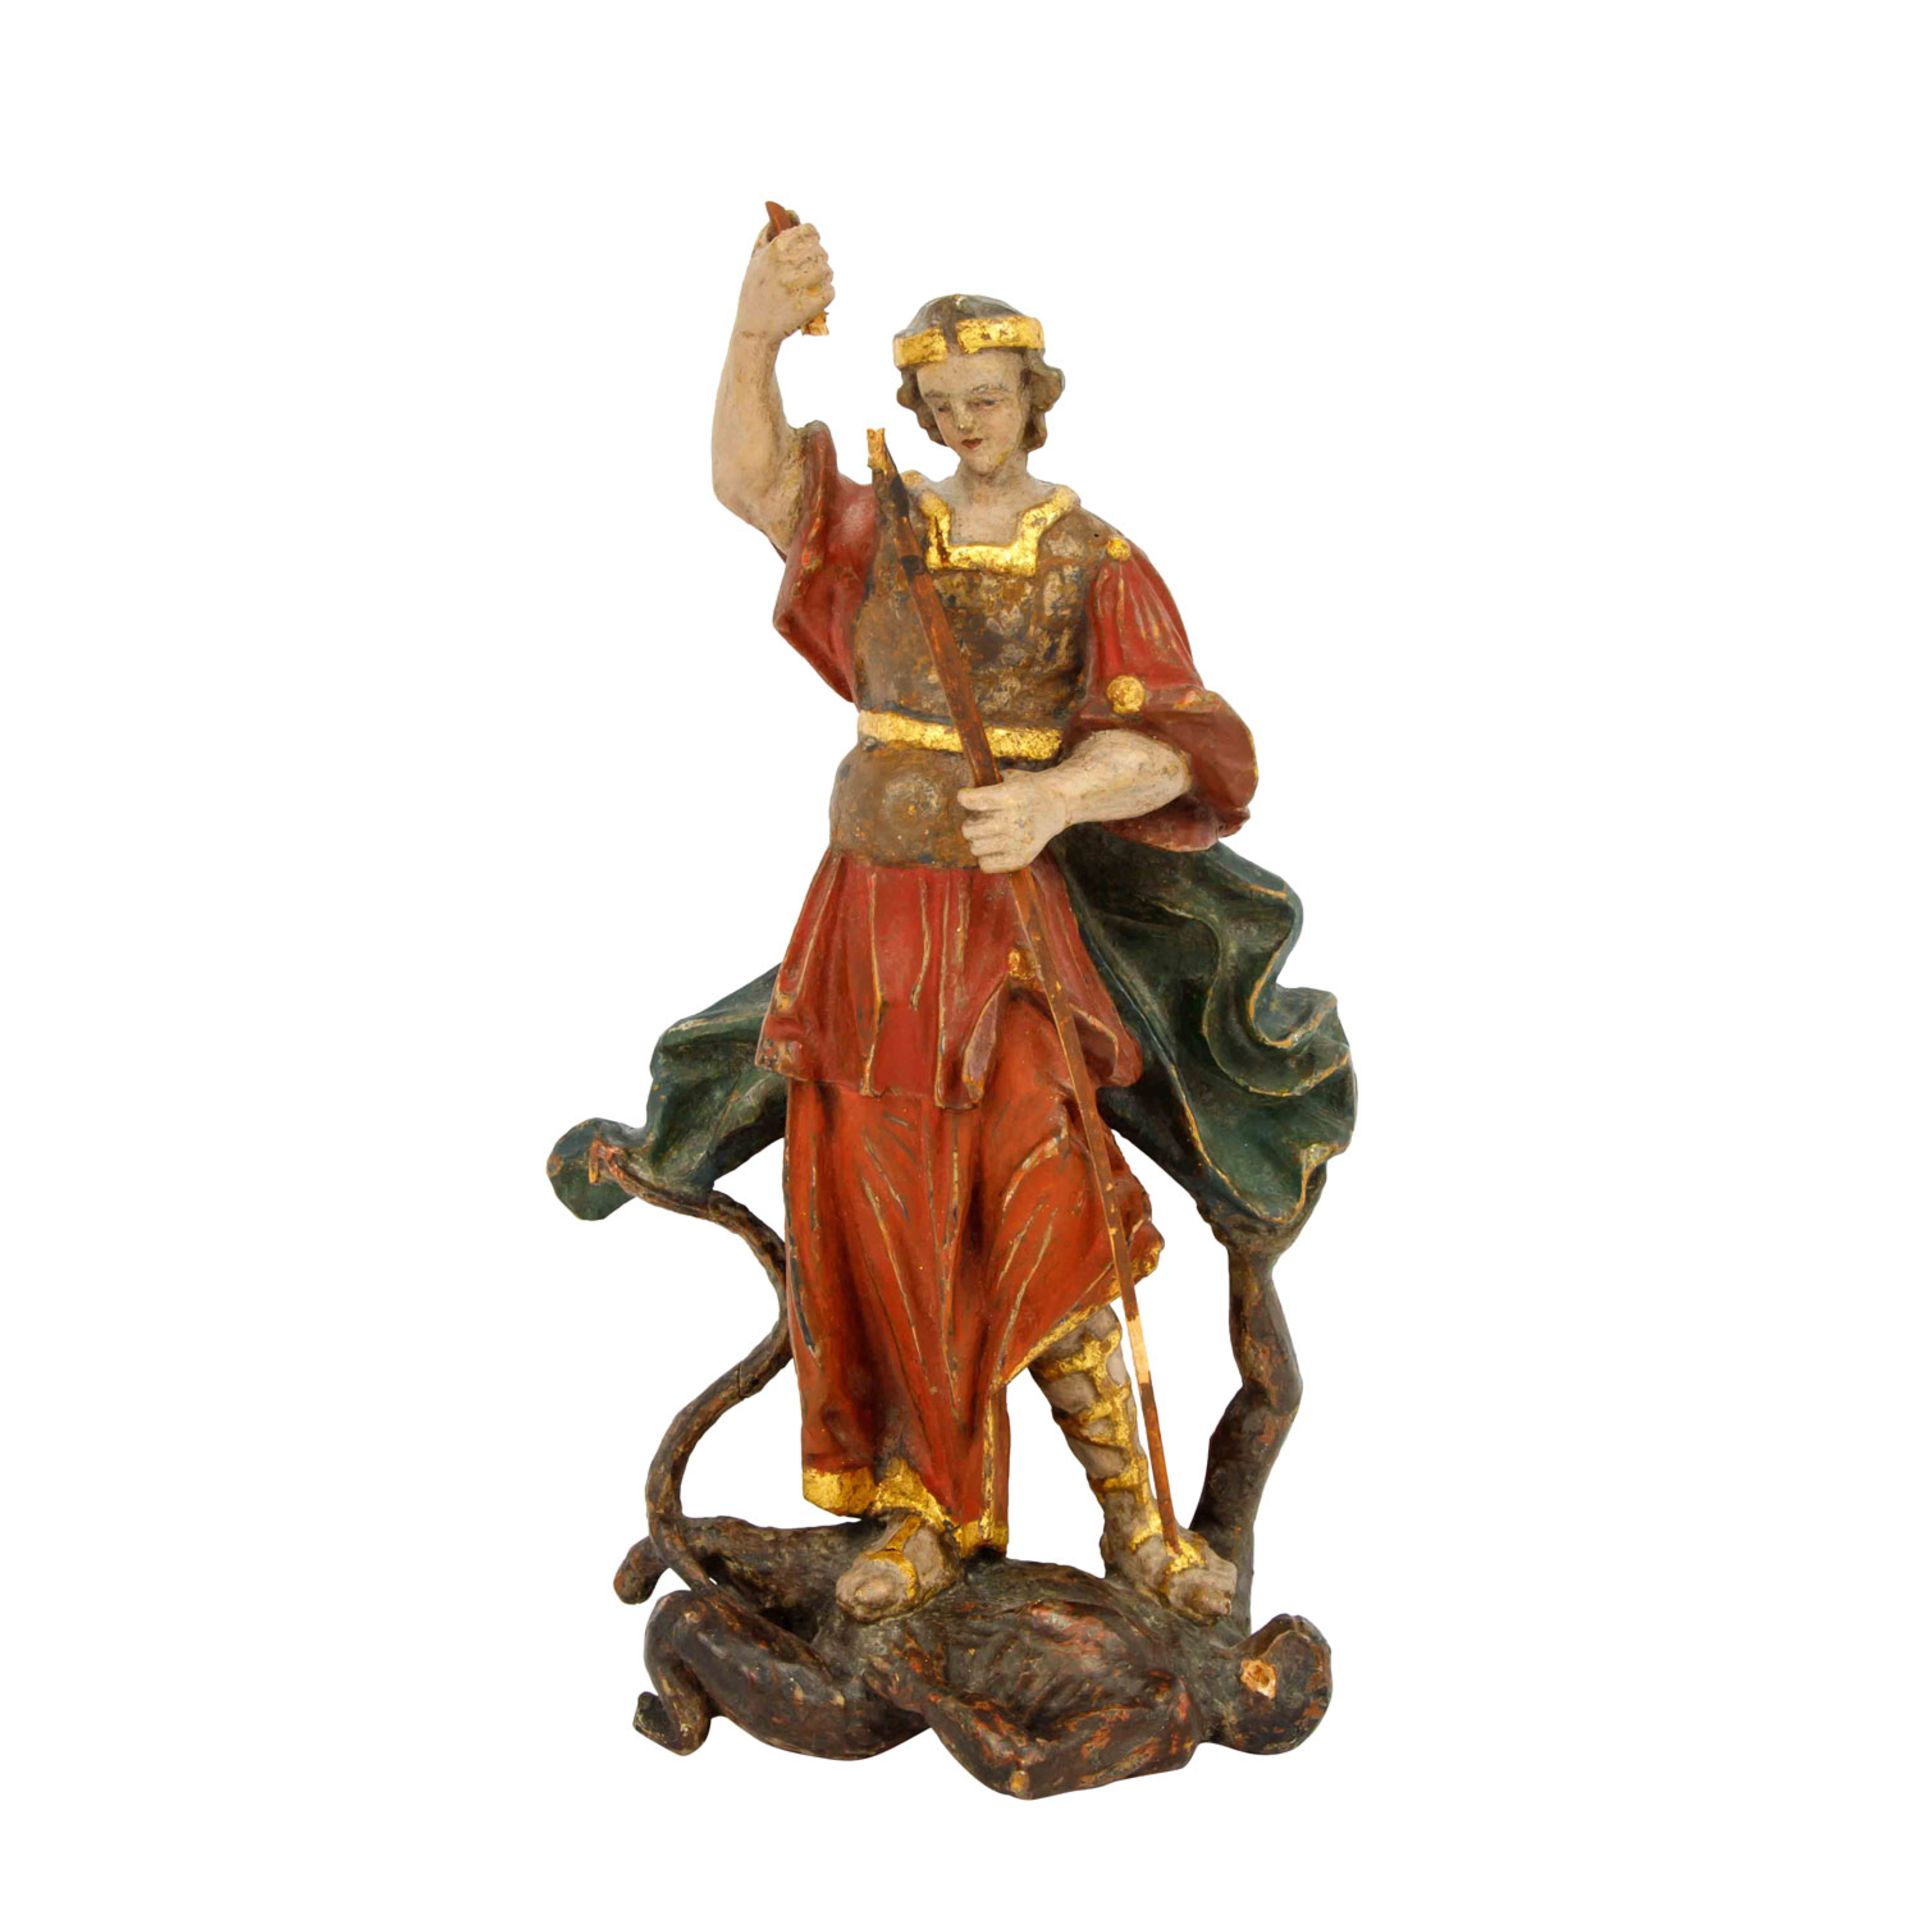 Mittelalterliche Figurengruppe "Erzengel Michael bezwingt Luzifer", 19. Jh.,